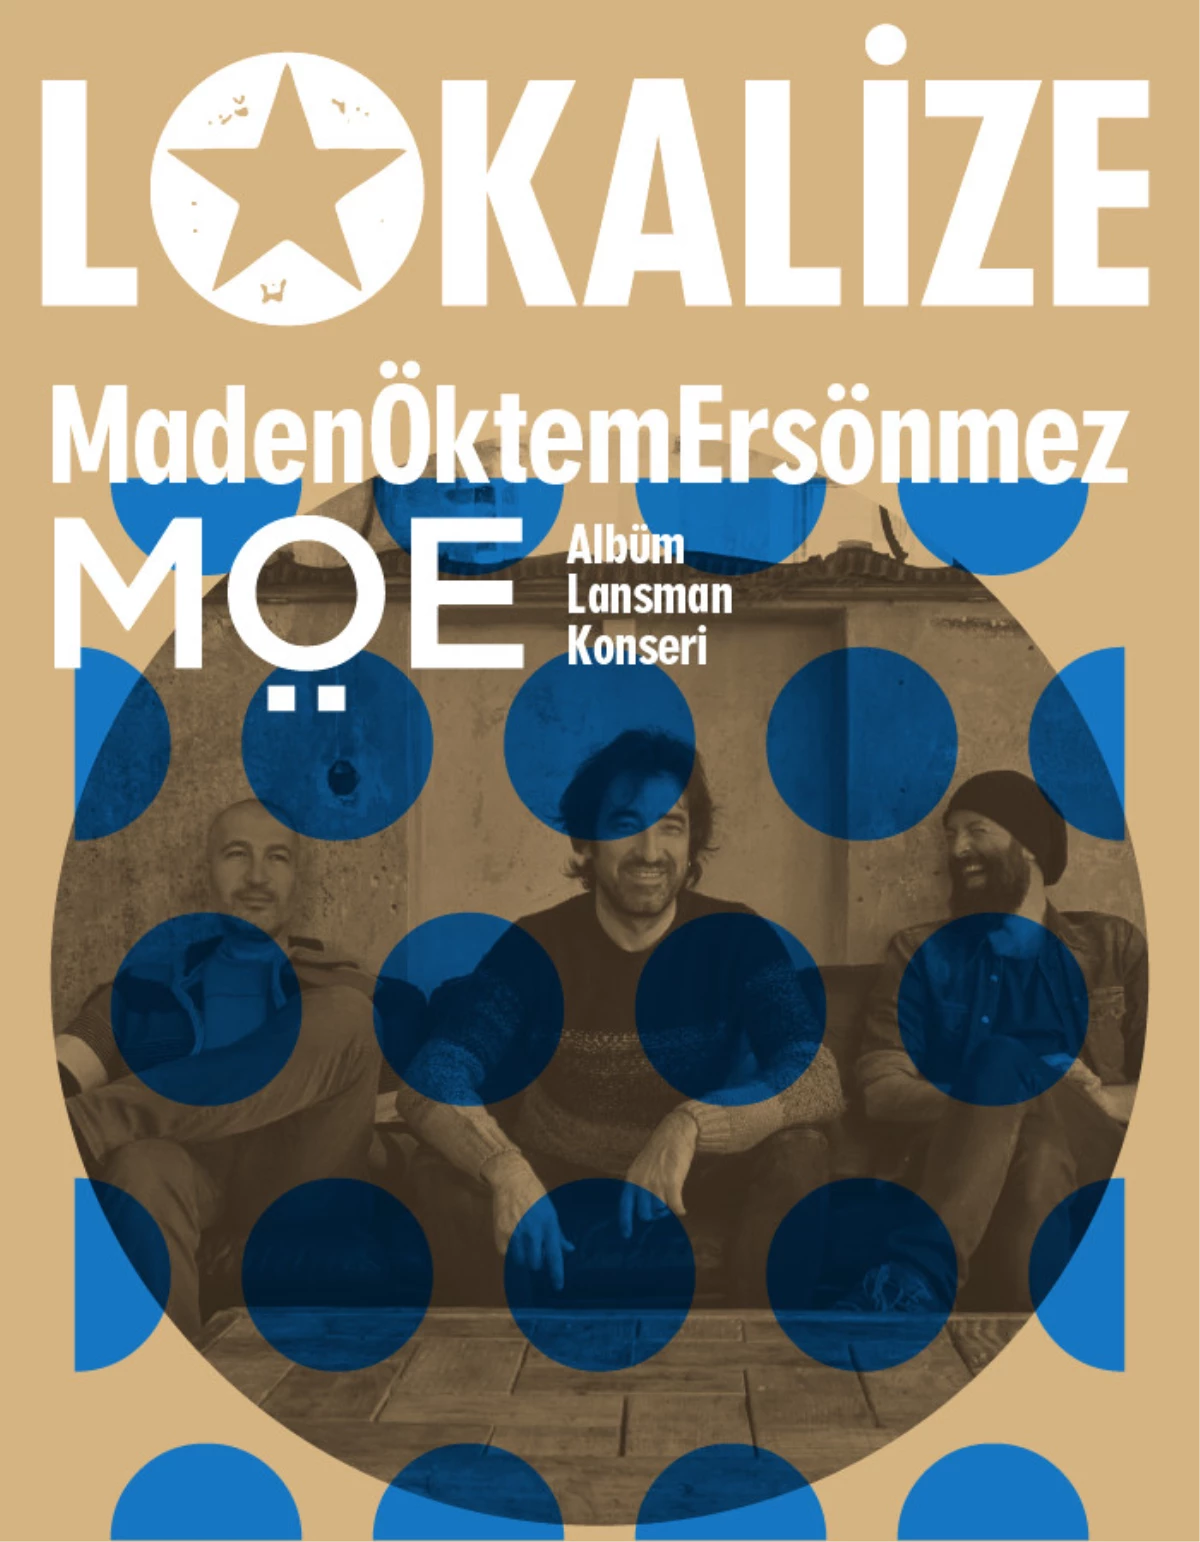 Lokalize: Madenöktemersönmez "Möe" Albüm Lansman Konseri